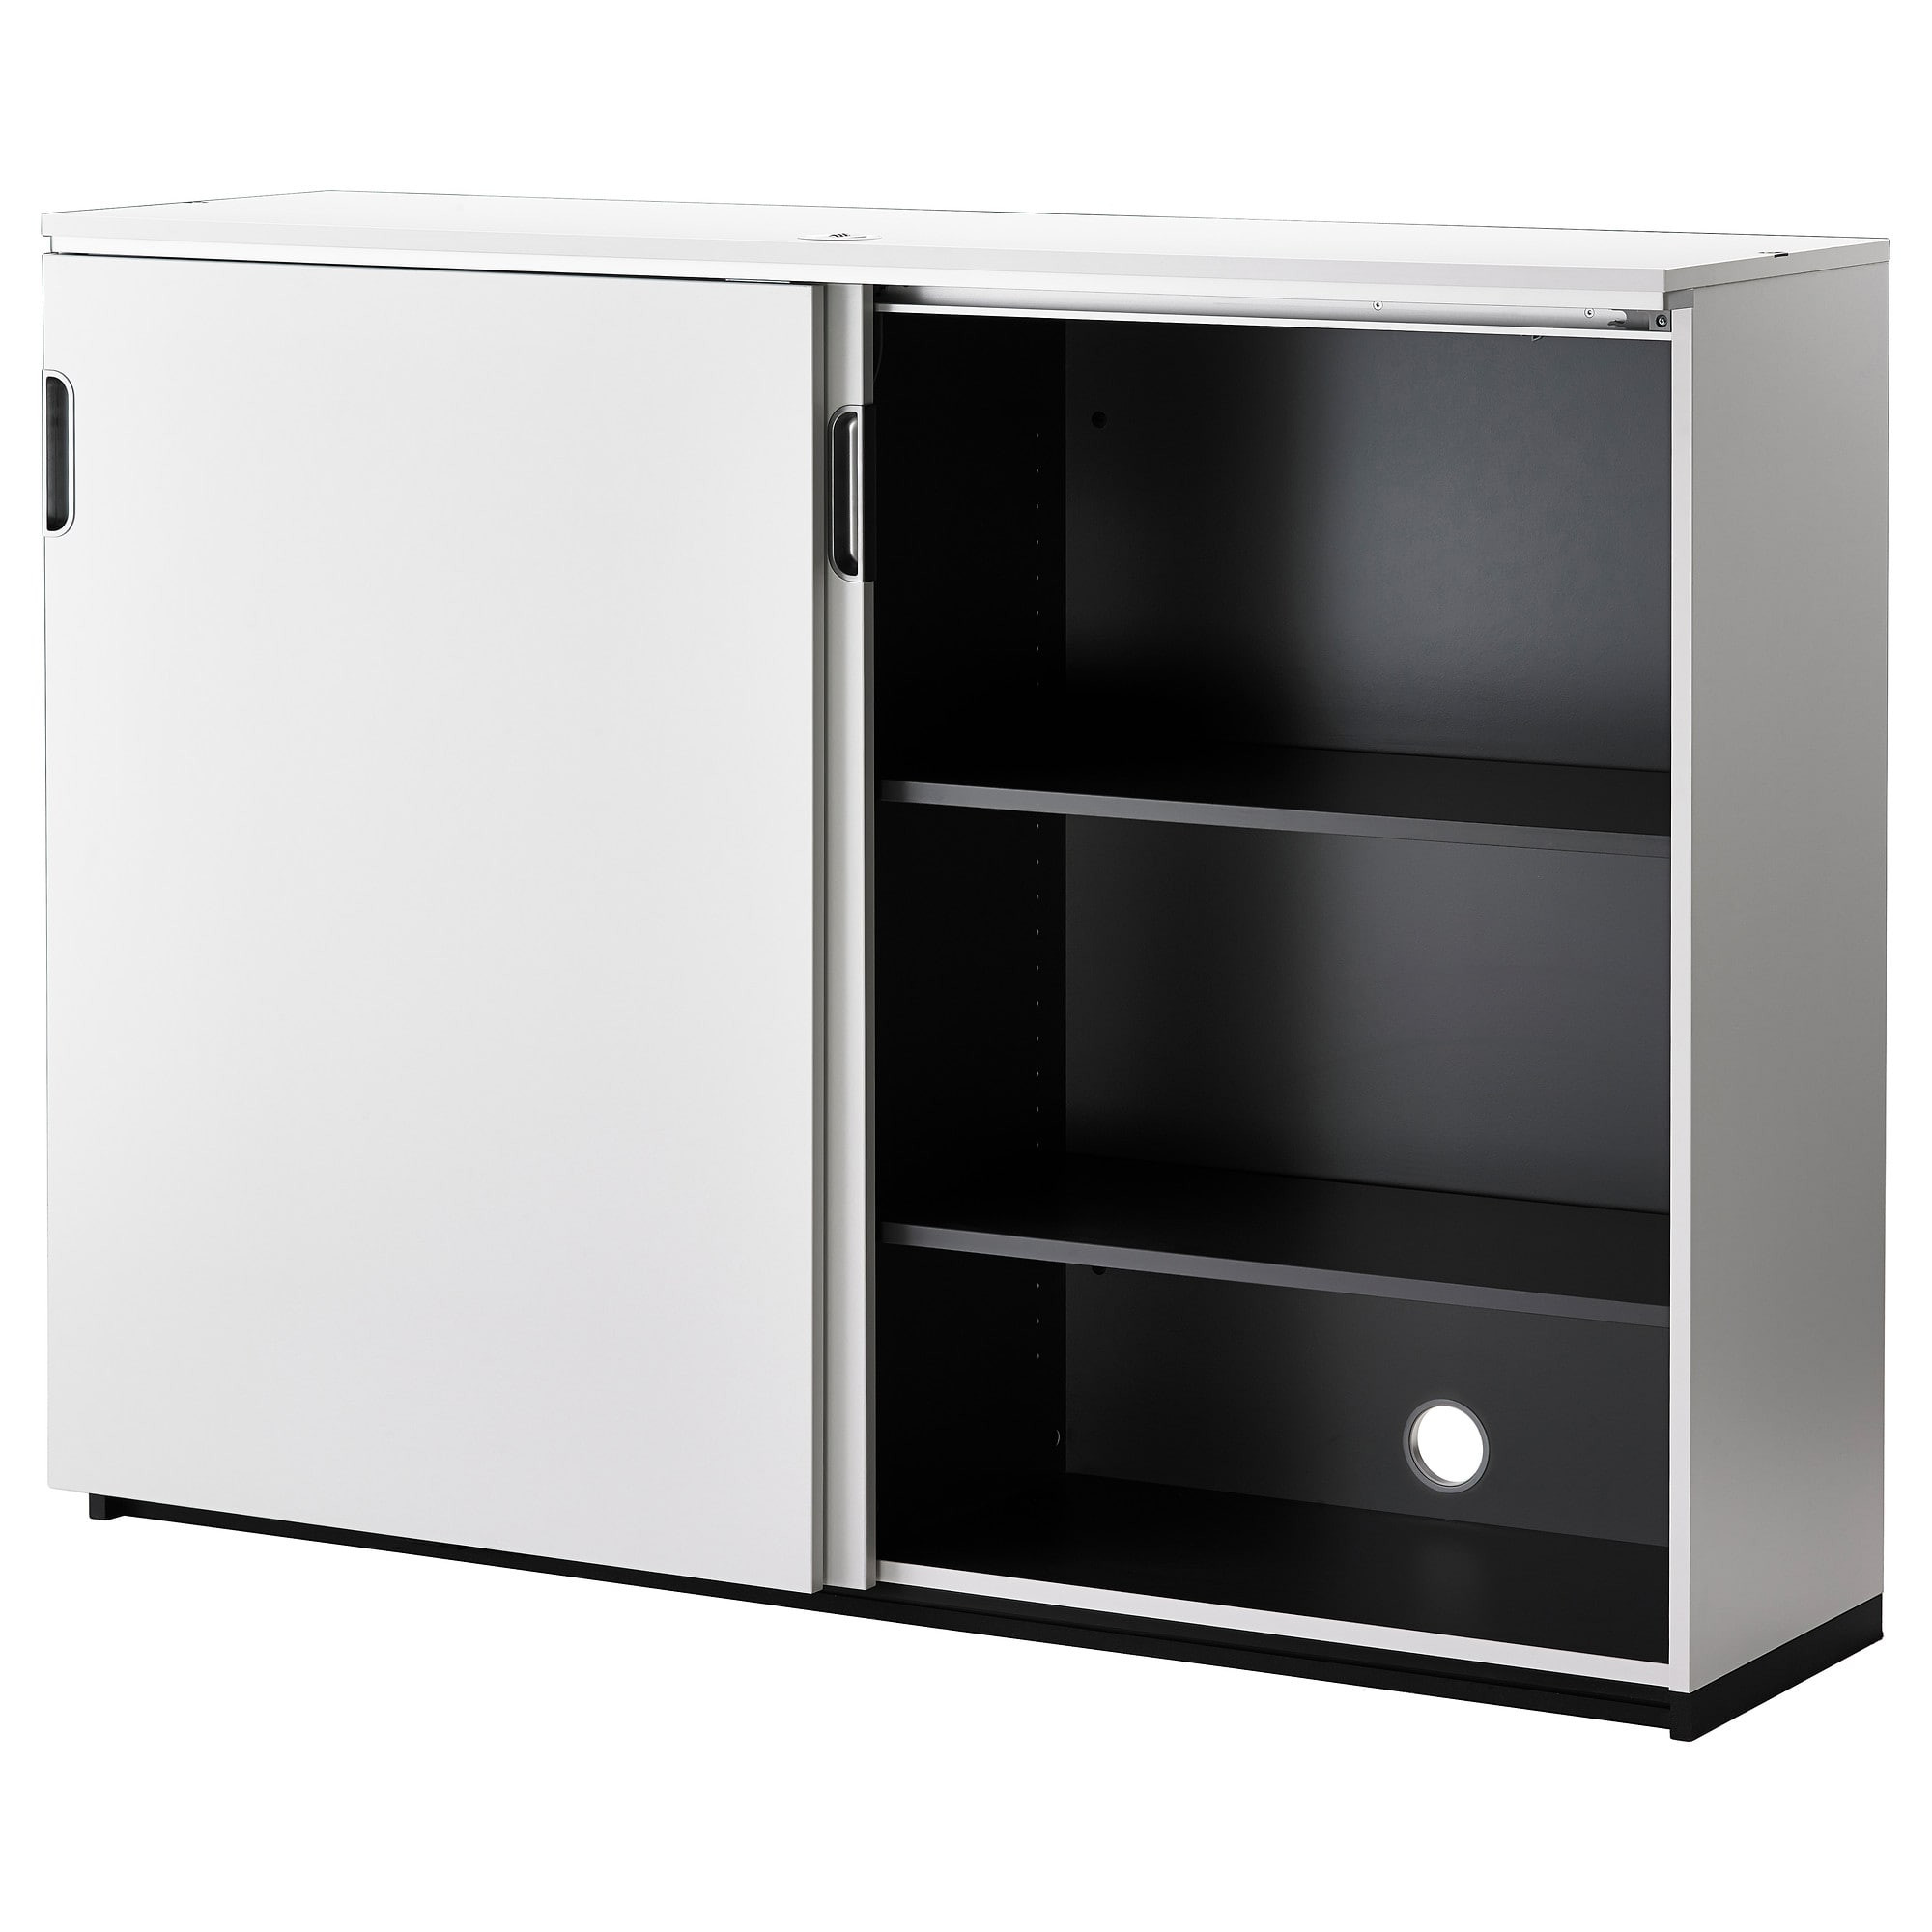 Best ideas about Sliding Doors Storage Cabinet
. Save or Pin GALANT Cabinet with sliding doors White 160x120 cm IKEA Now.